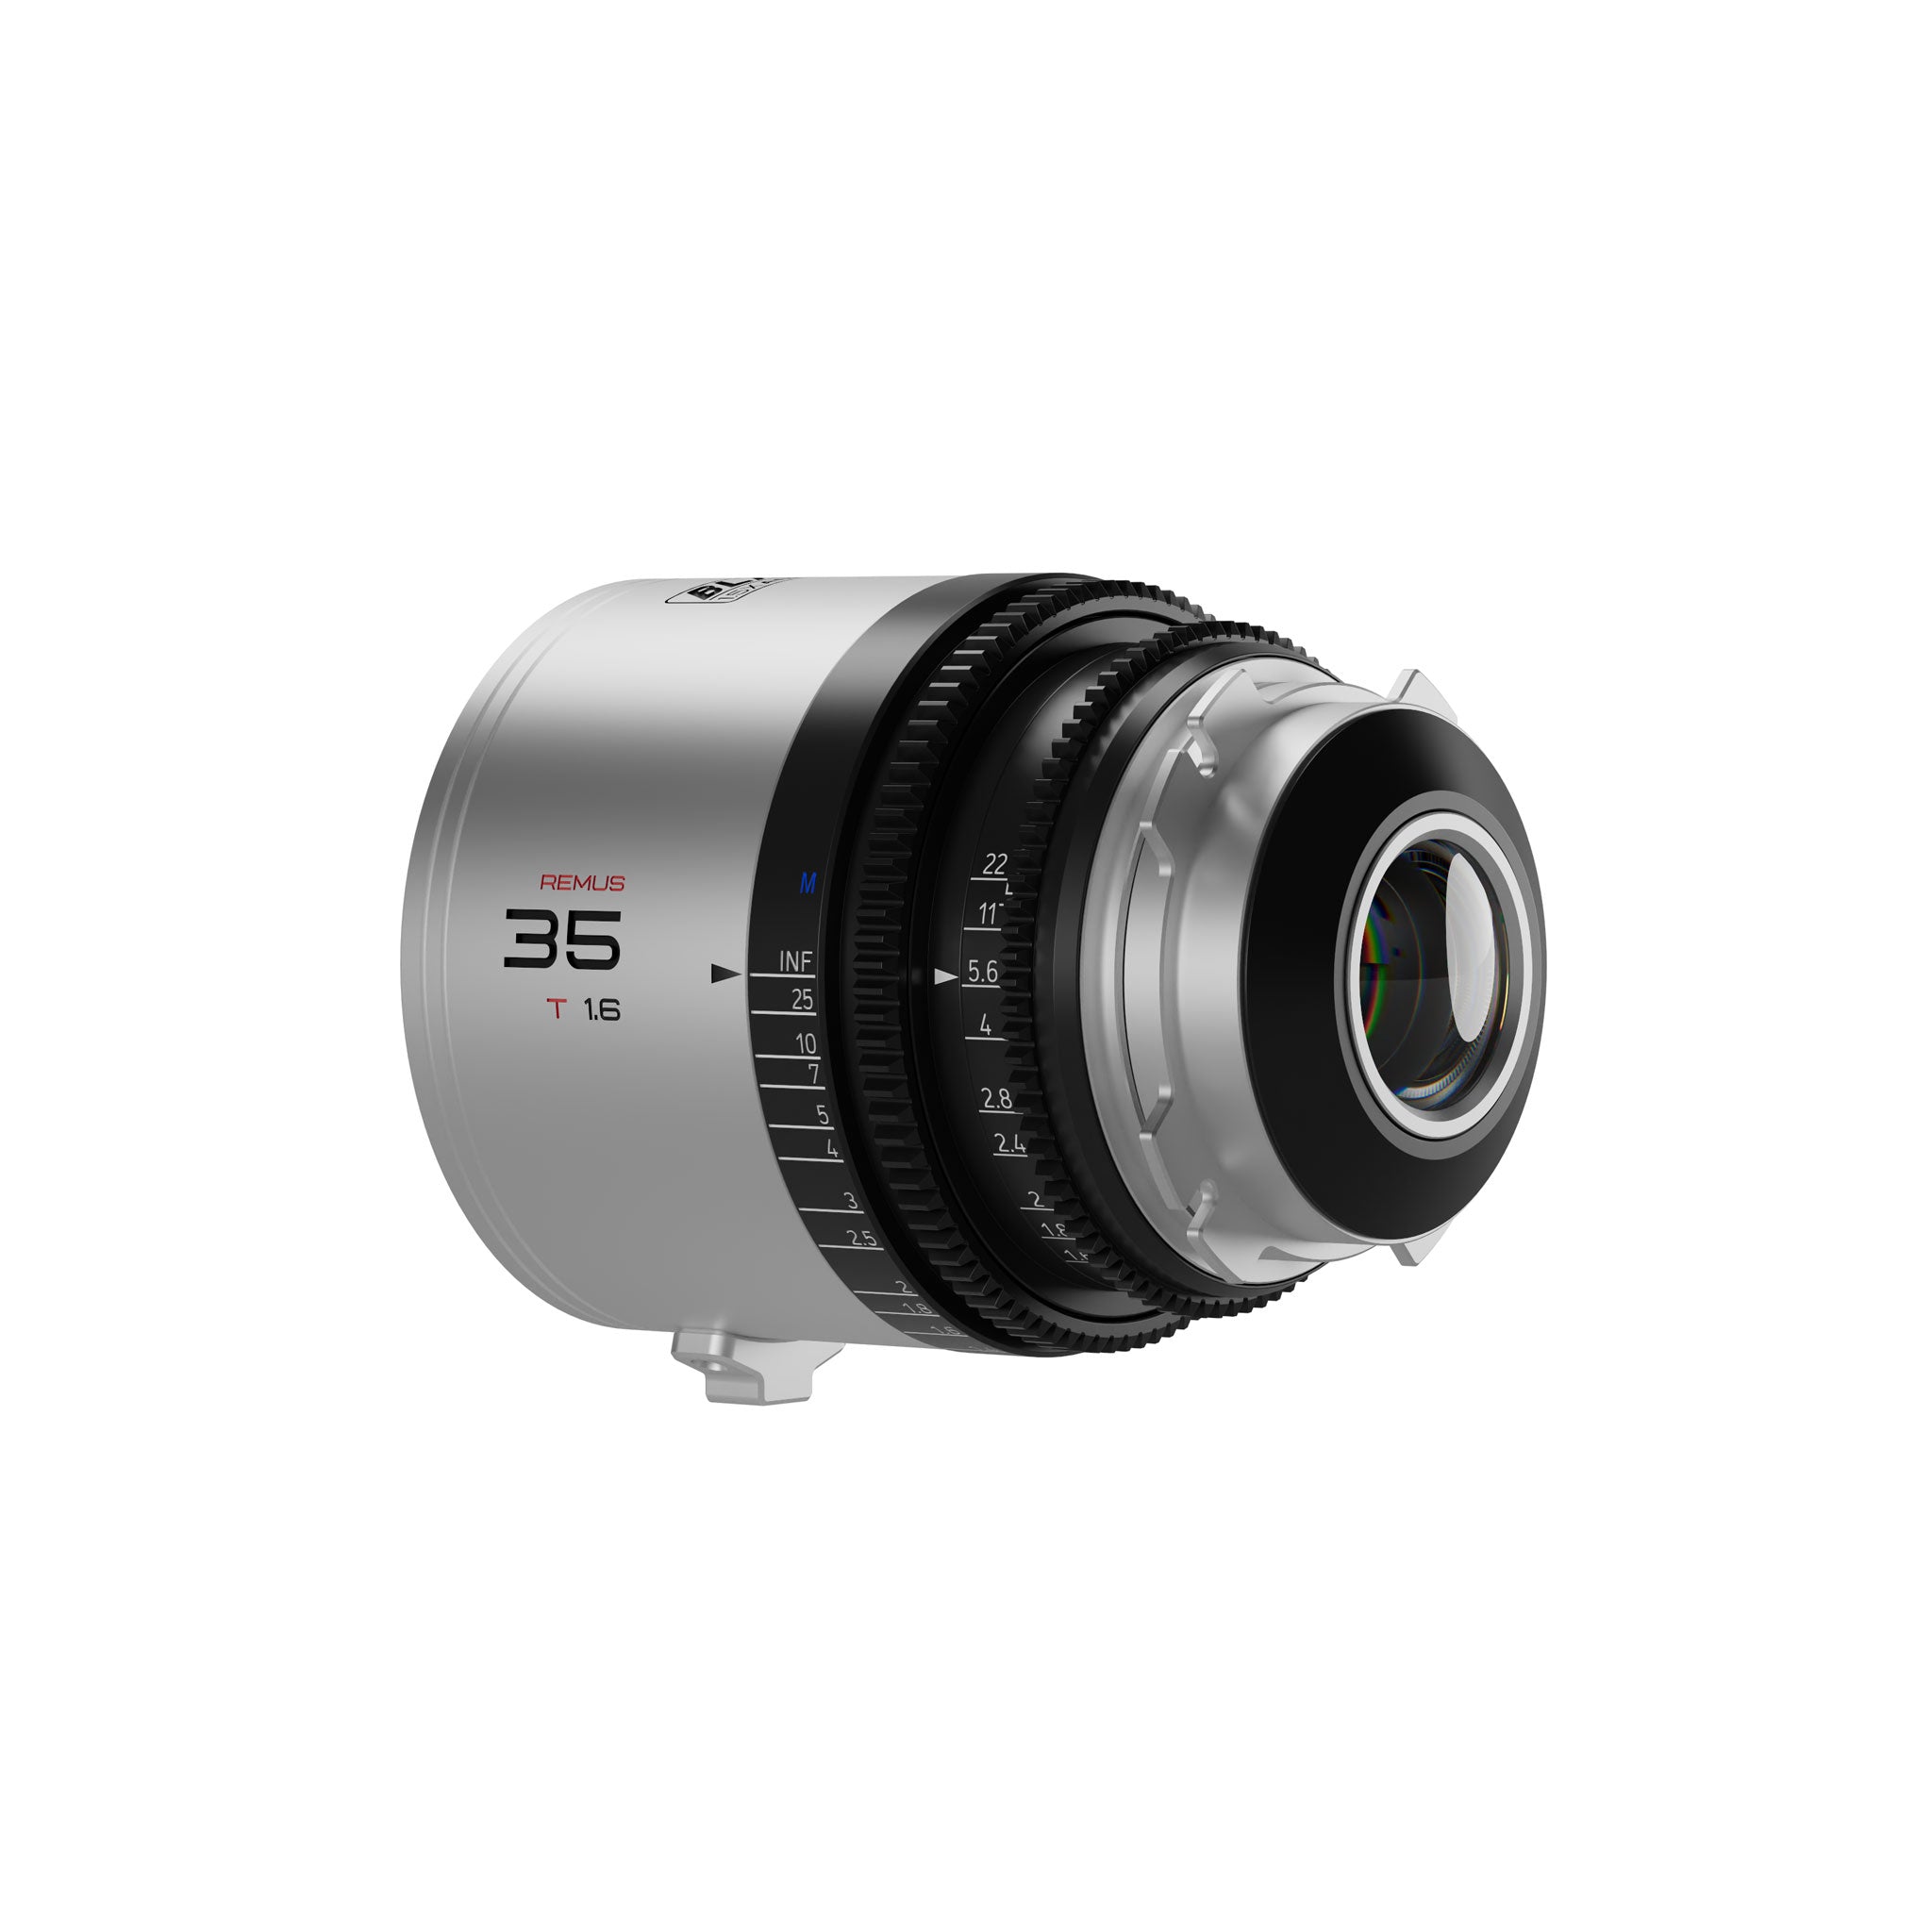 Remus 35mm T1.6 1.5X S35 Anamorphic Lens